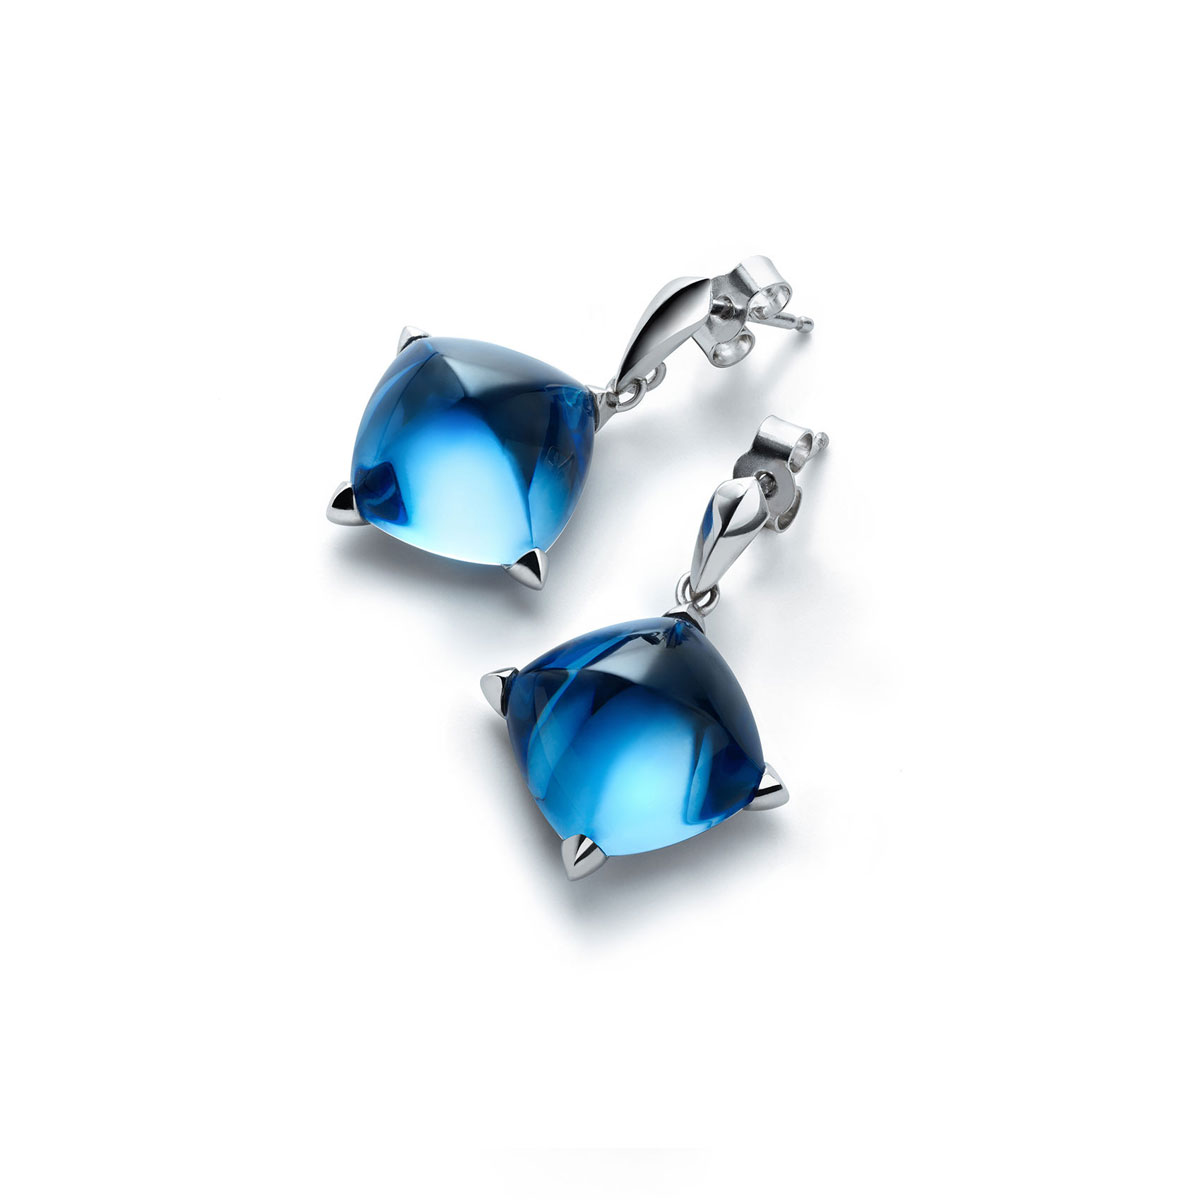 Baccarat Crystal Medicis Stem Earrings Sterling Silver Blue Riviera